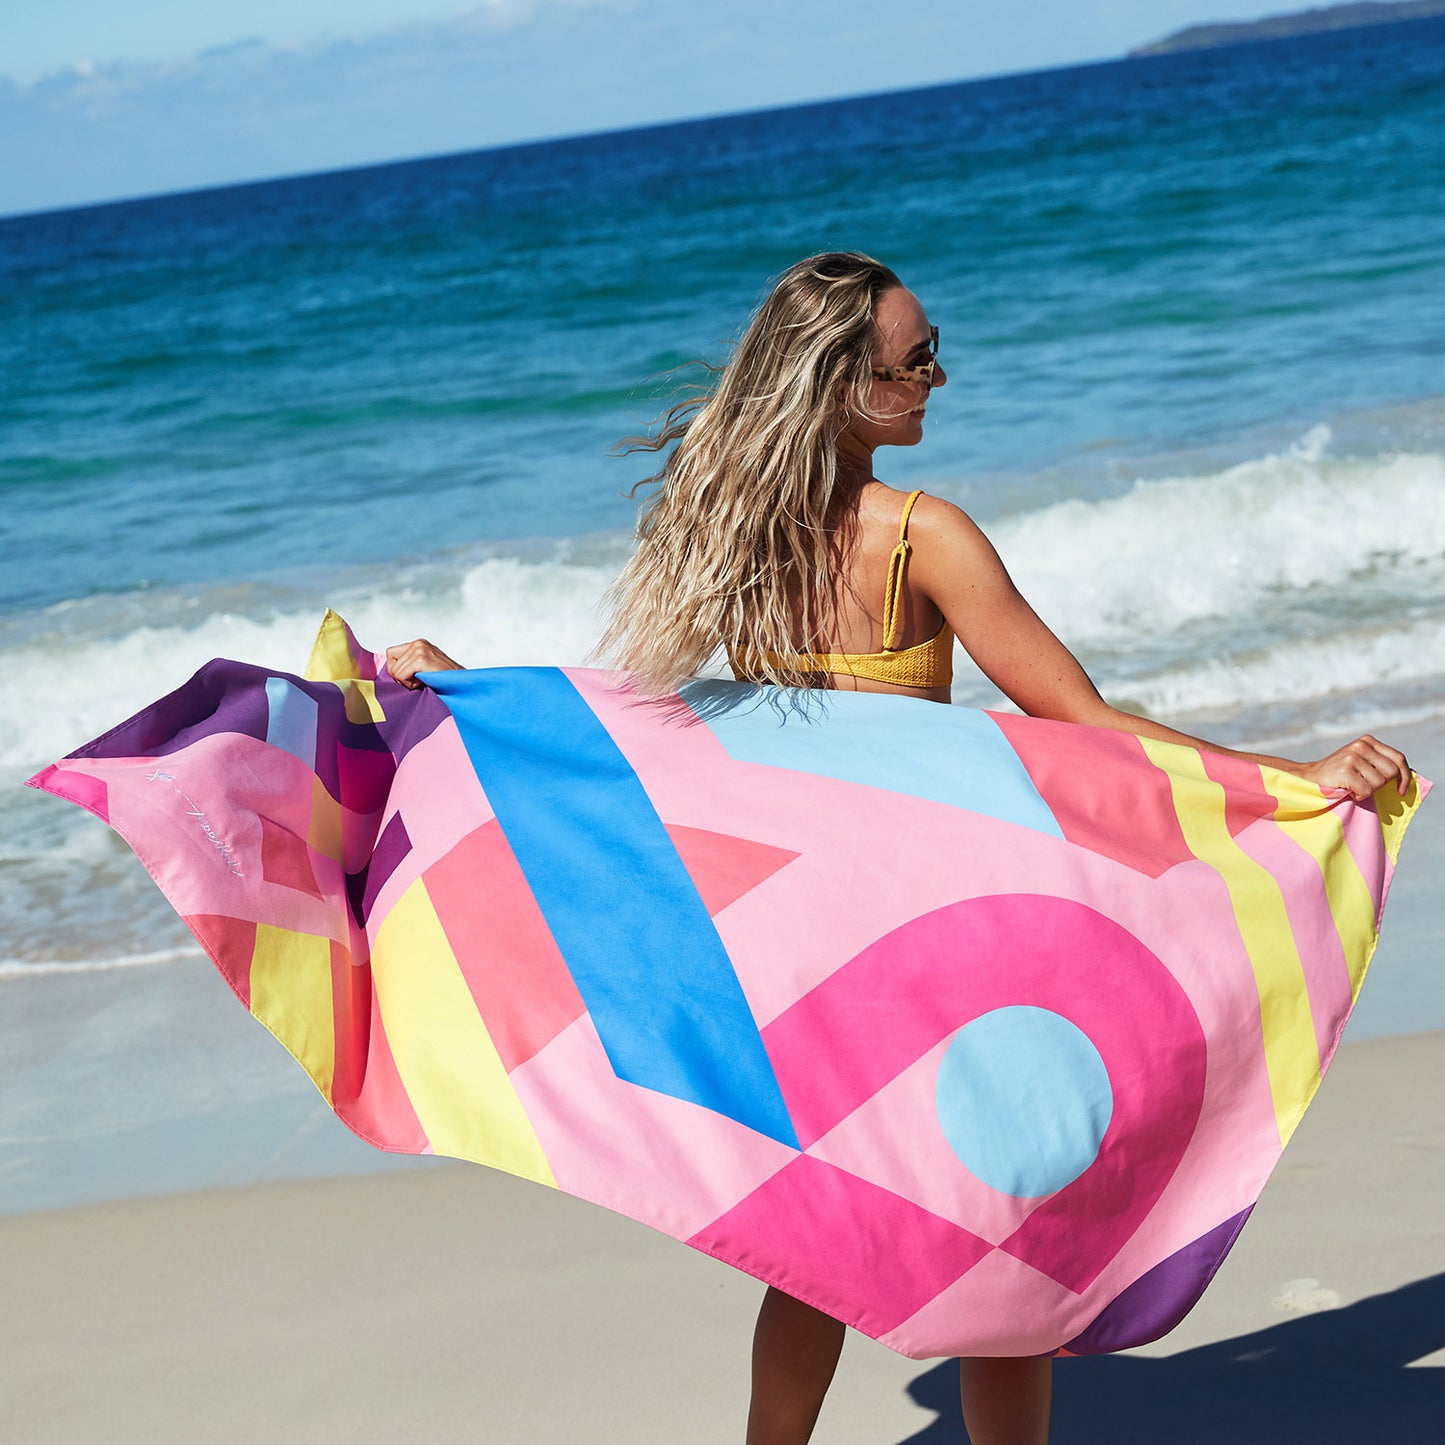 Sand Free Beach towel blowing in wind 